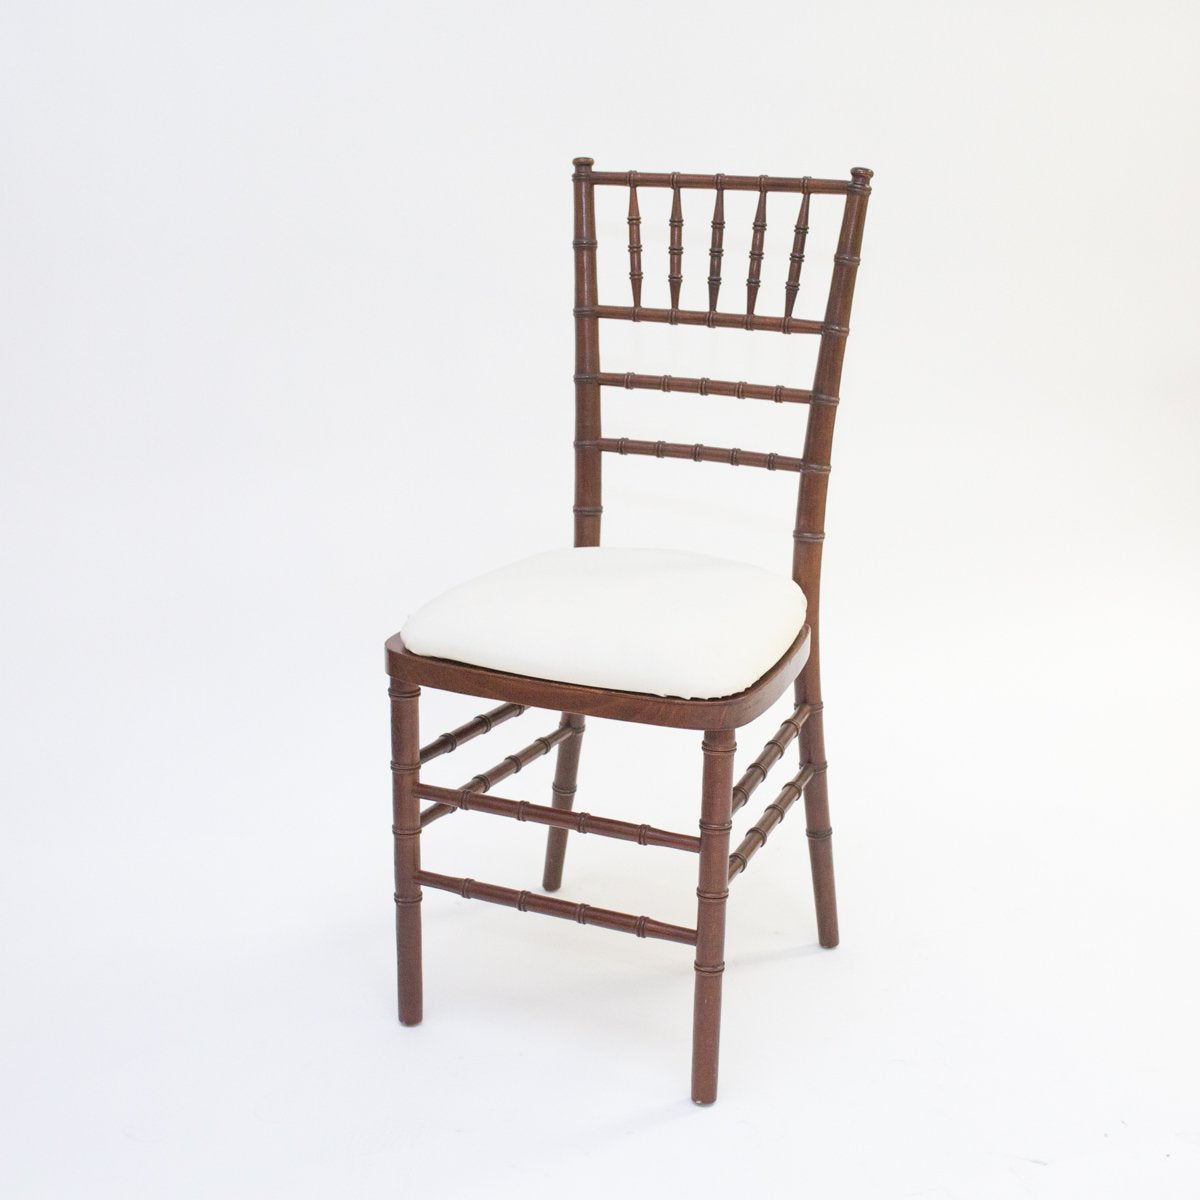 Chiavari Chairs  Premier Table Linens Blog